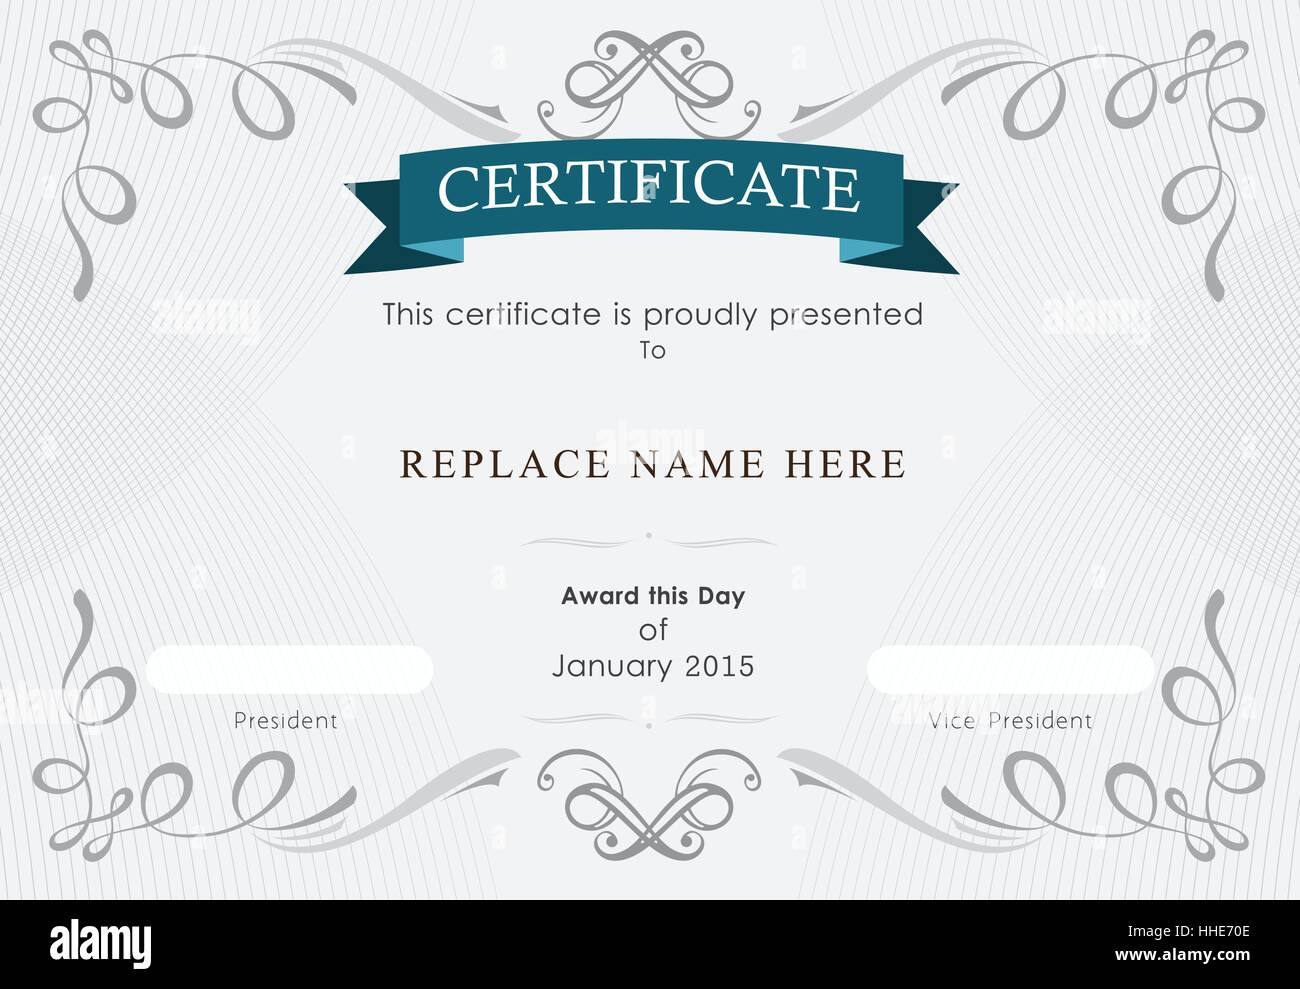 Certificate border, Certificate template. vector illustration With Award Certificate Border Template